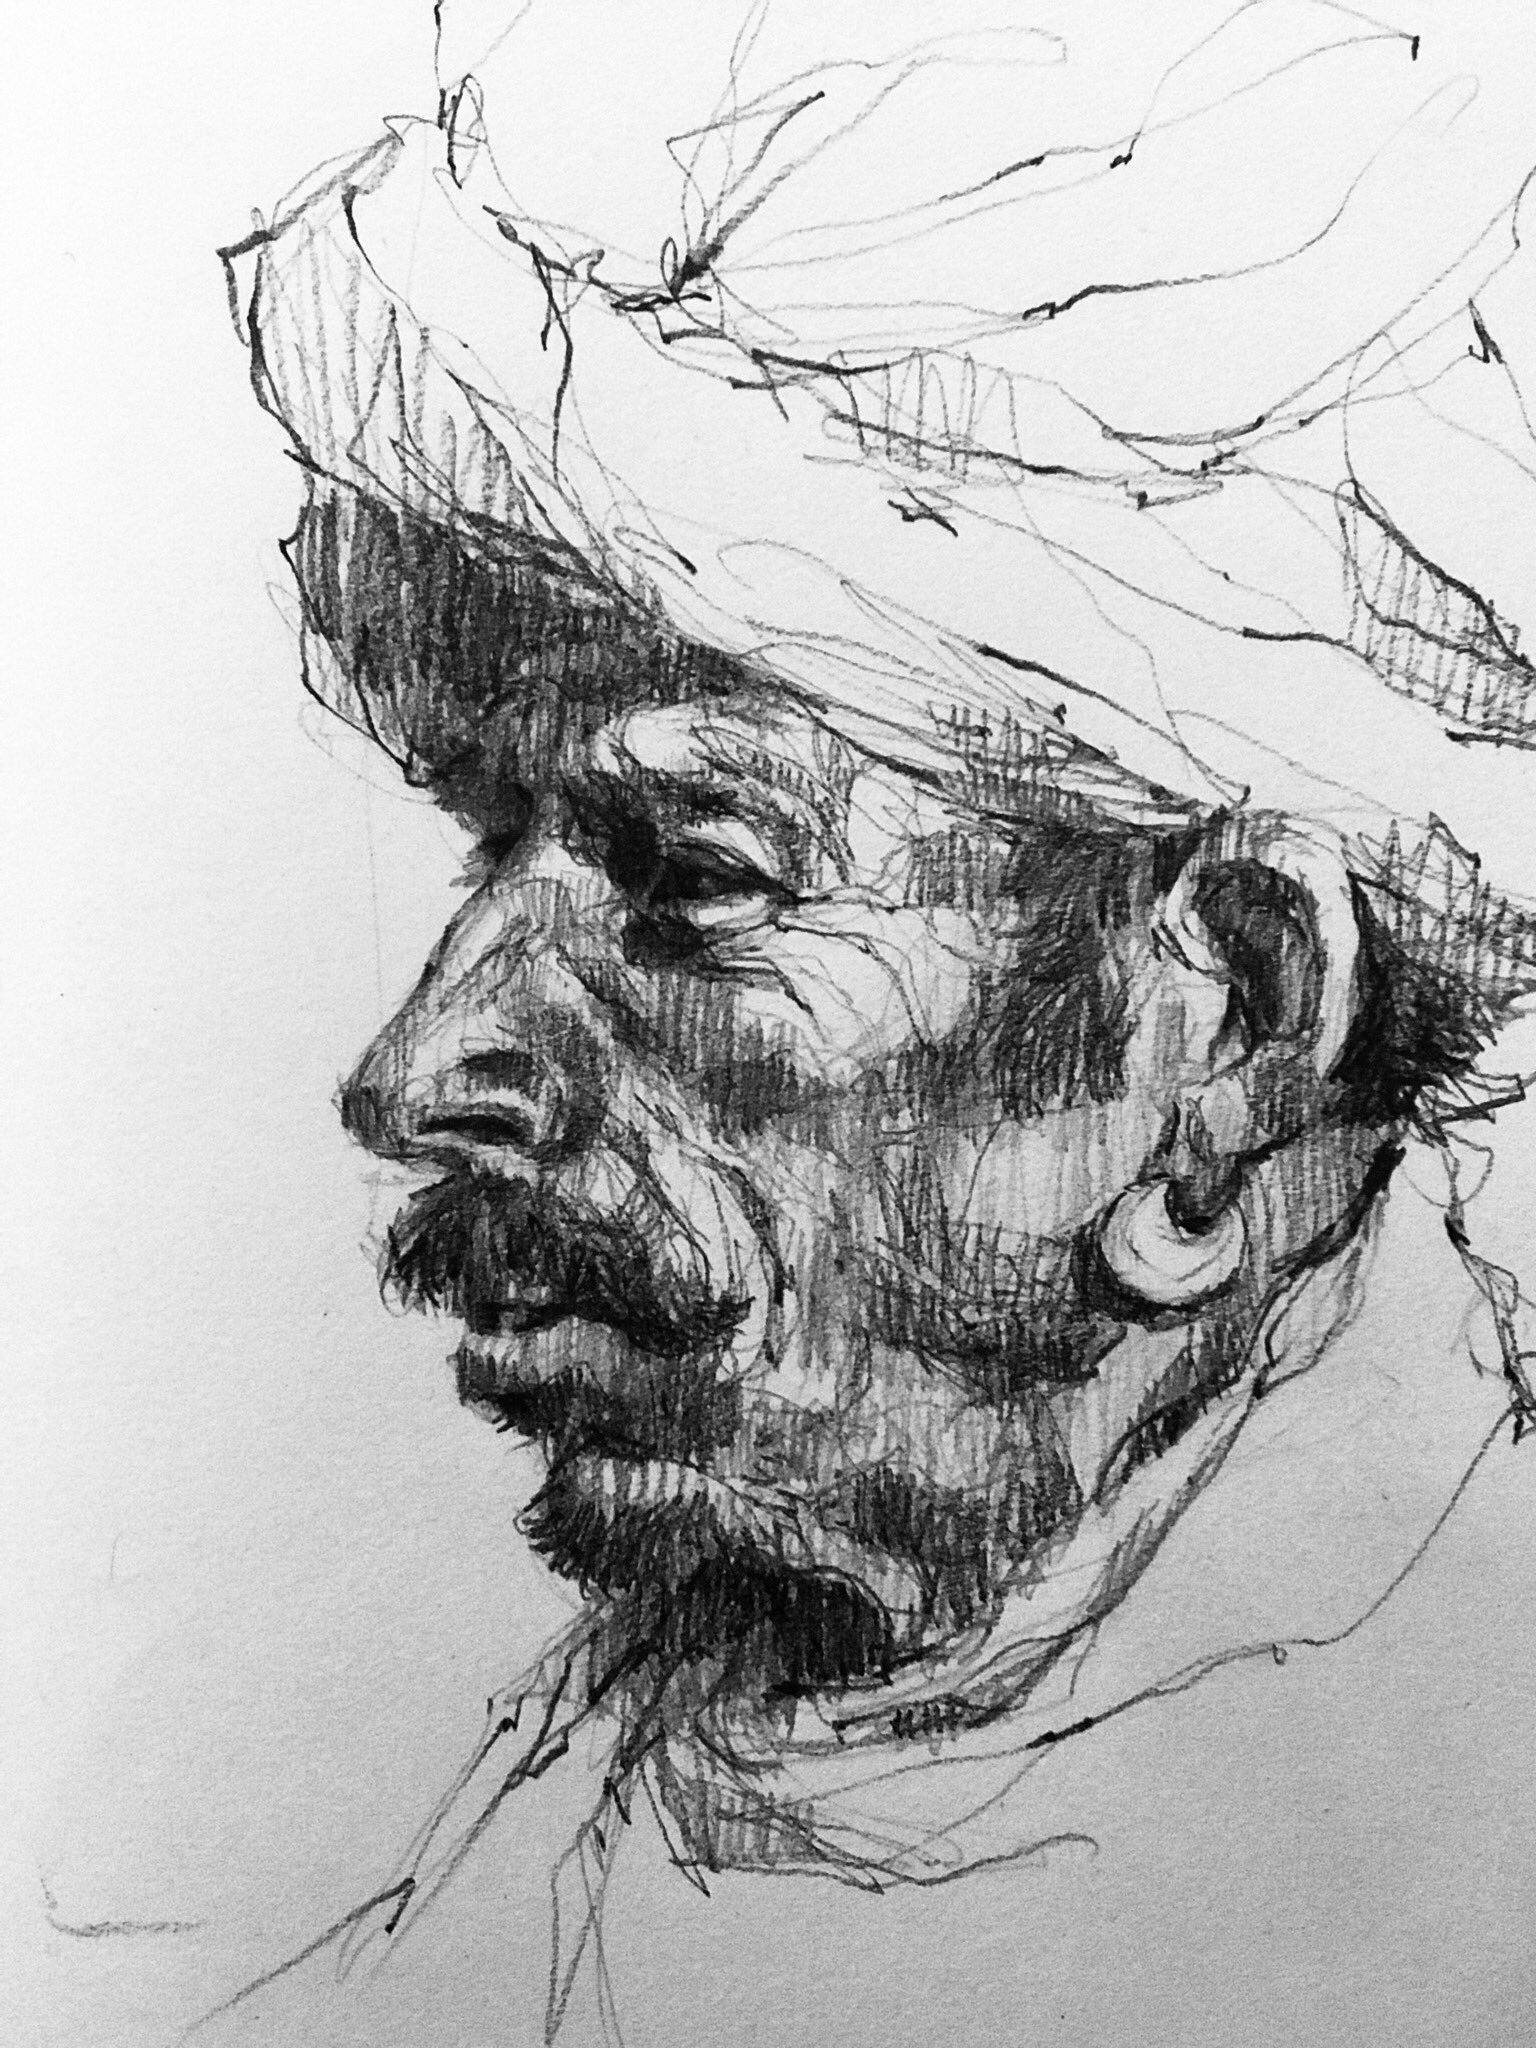 Prakash Thombre on X: Pencil sketch #drawing #headstudy